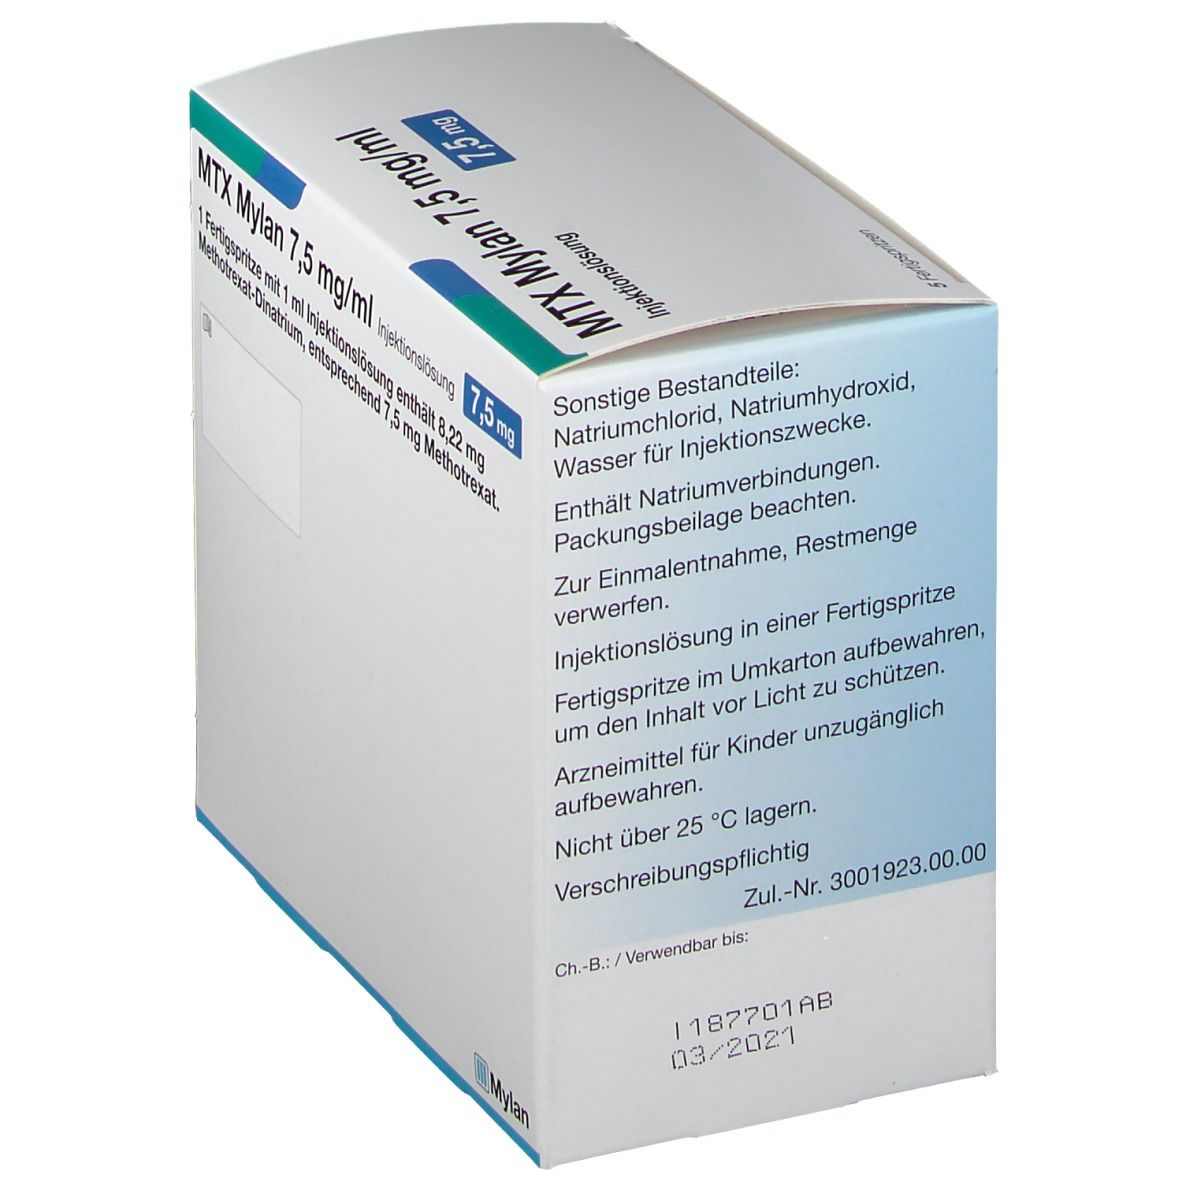 MTX Mylan 7,5 mg/ml 7,5 mg